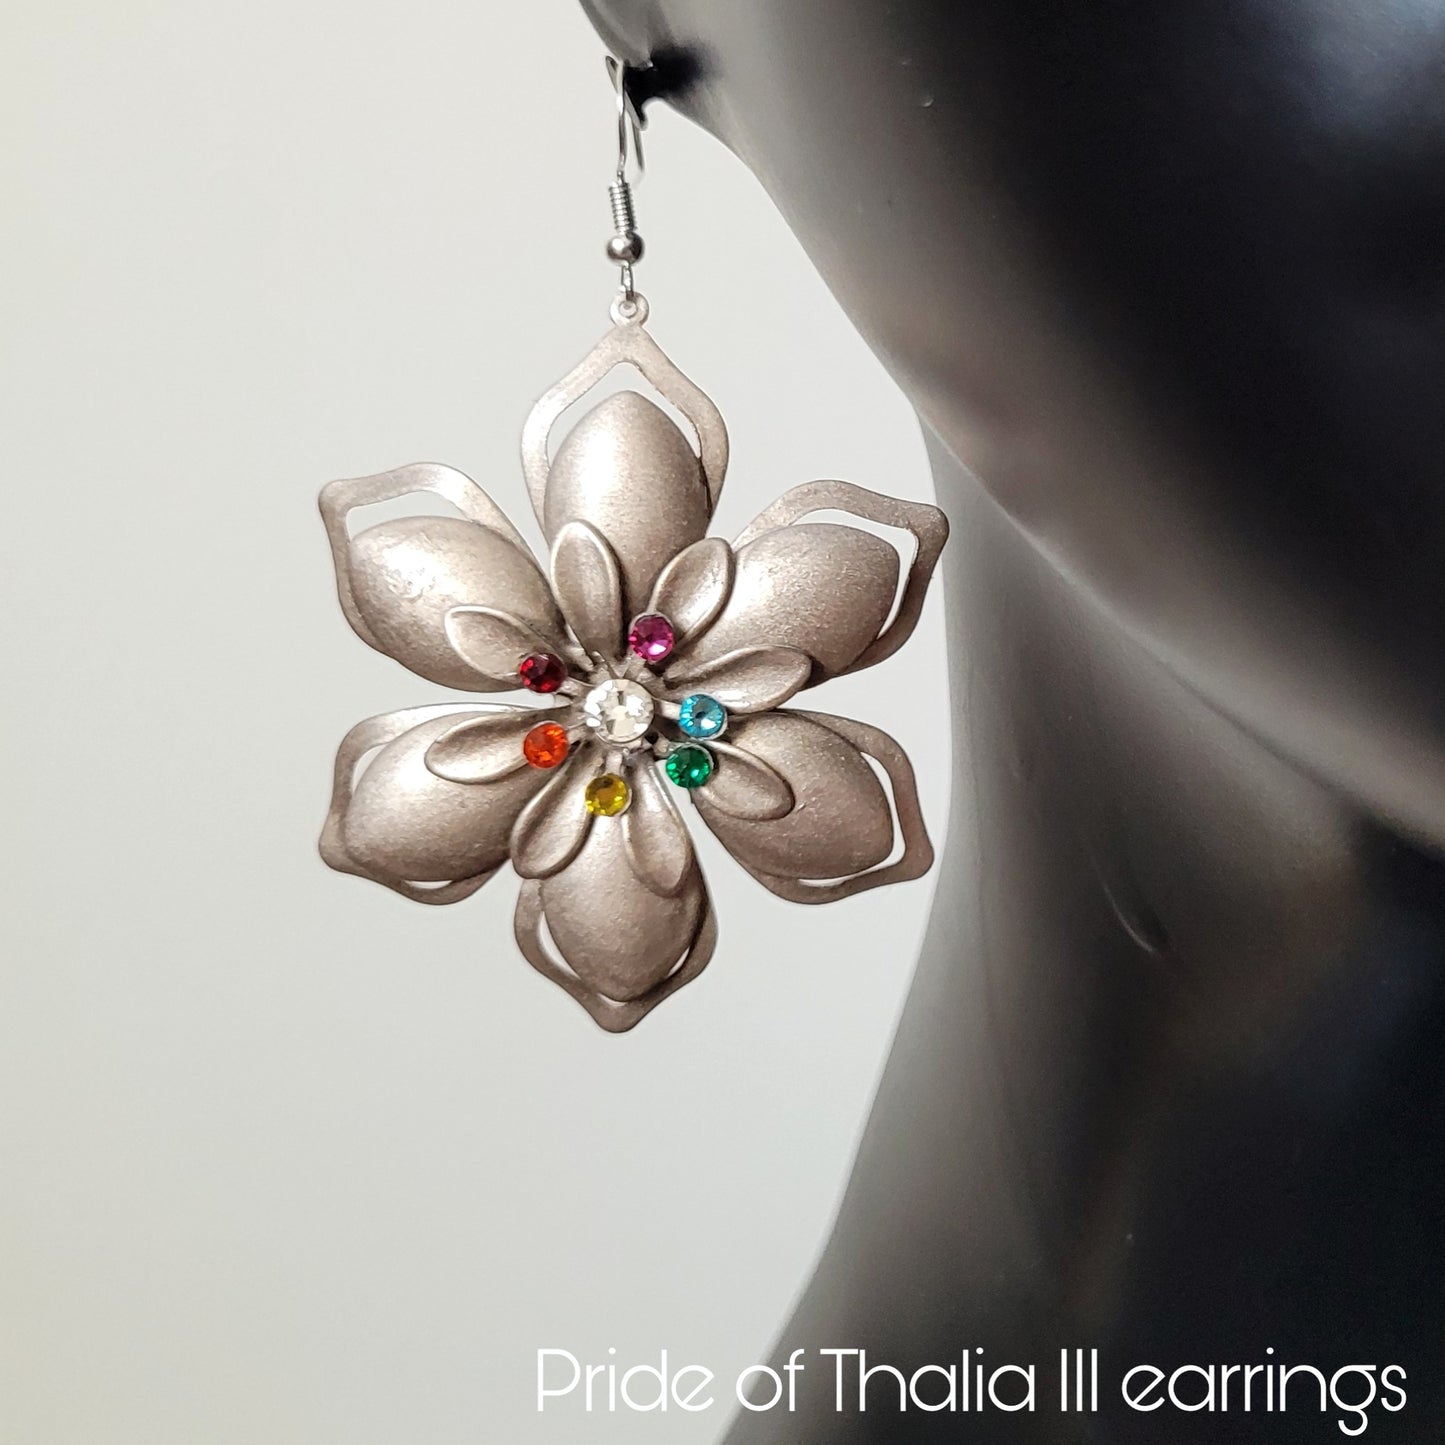 Deusa ex Machina collection: The Pride of Thalia earrings